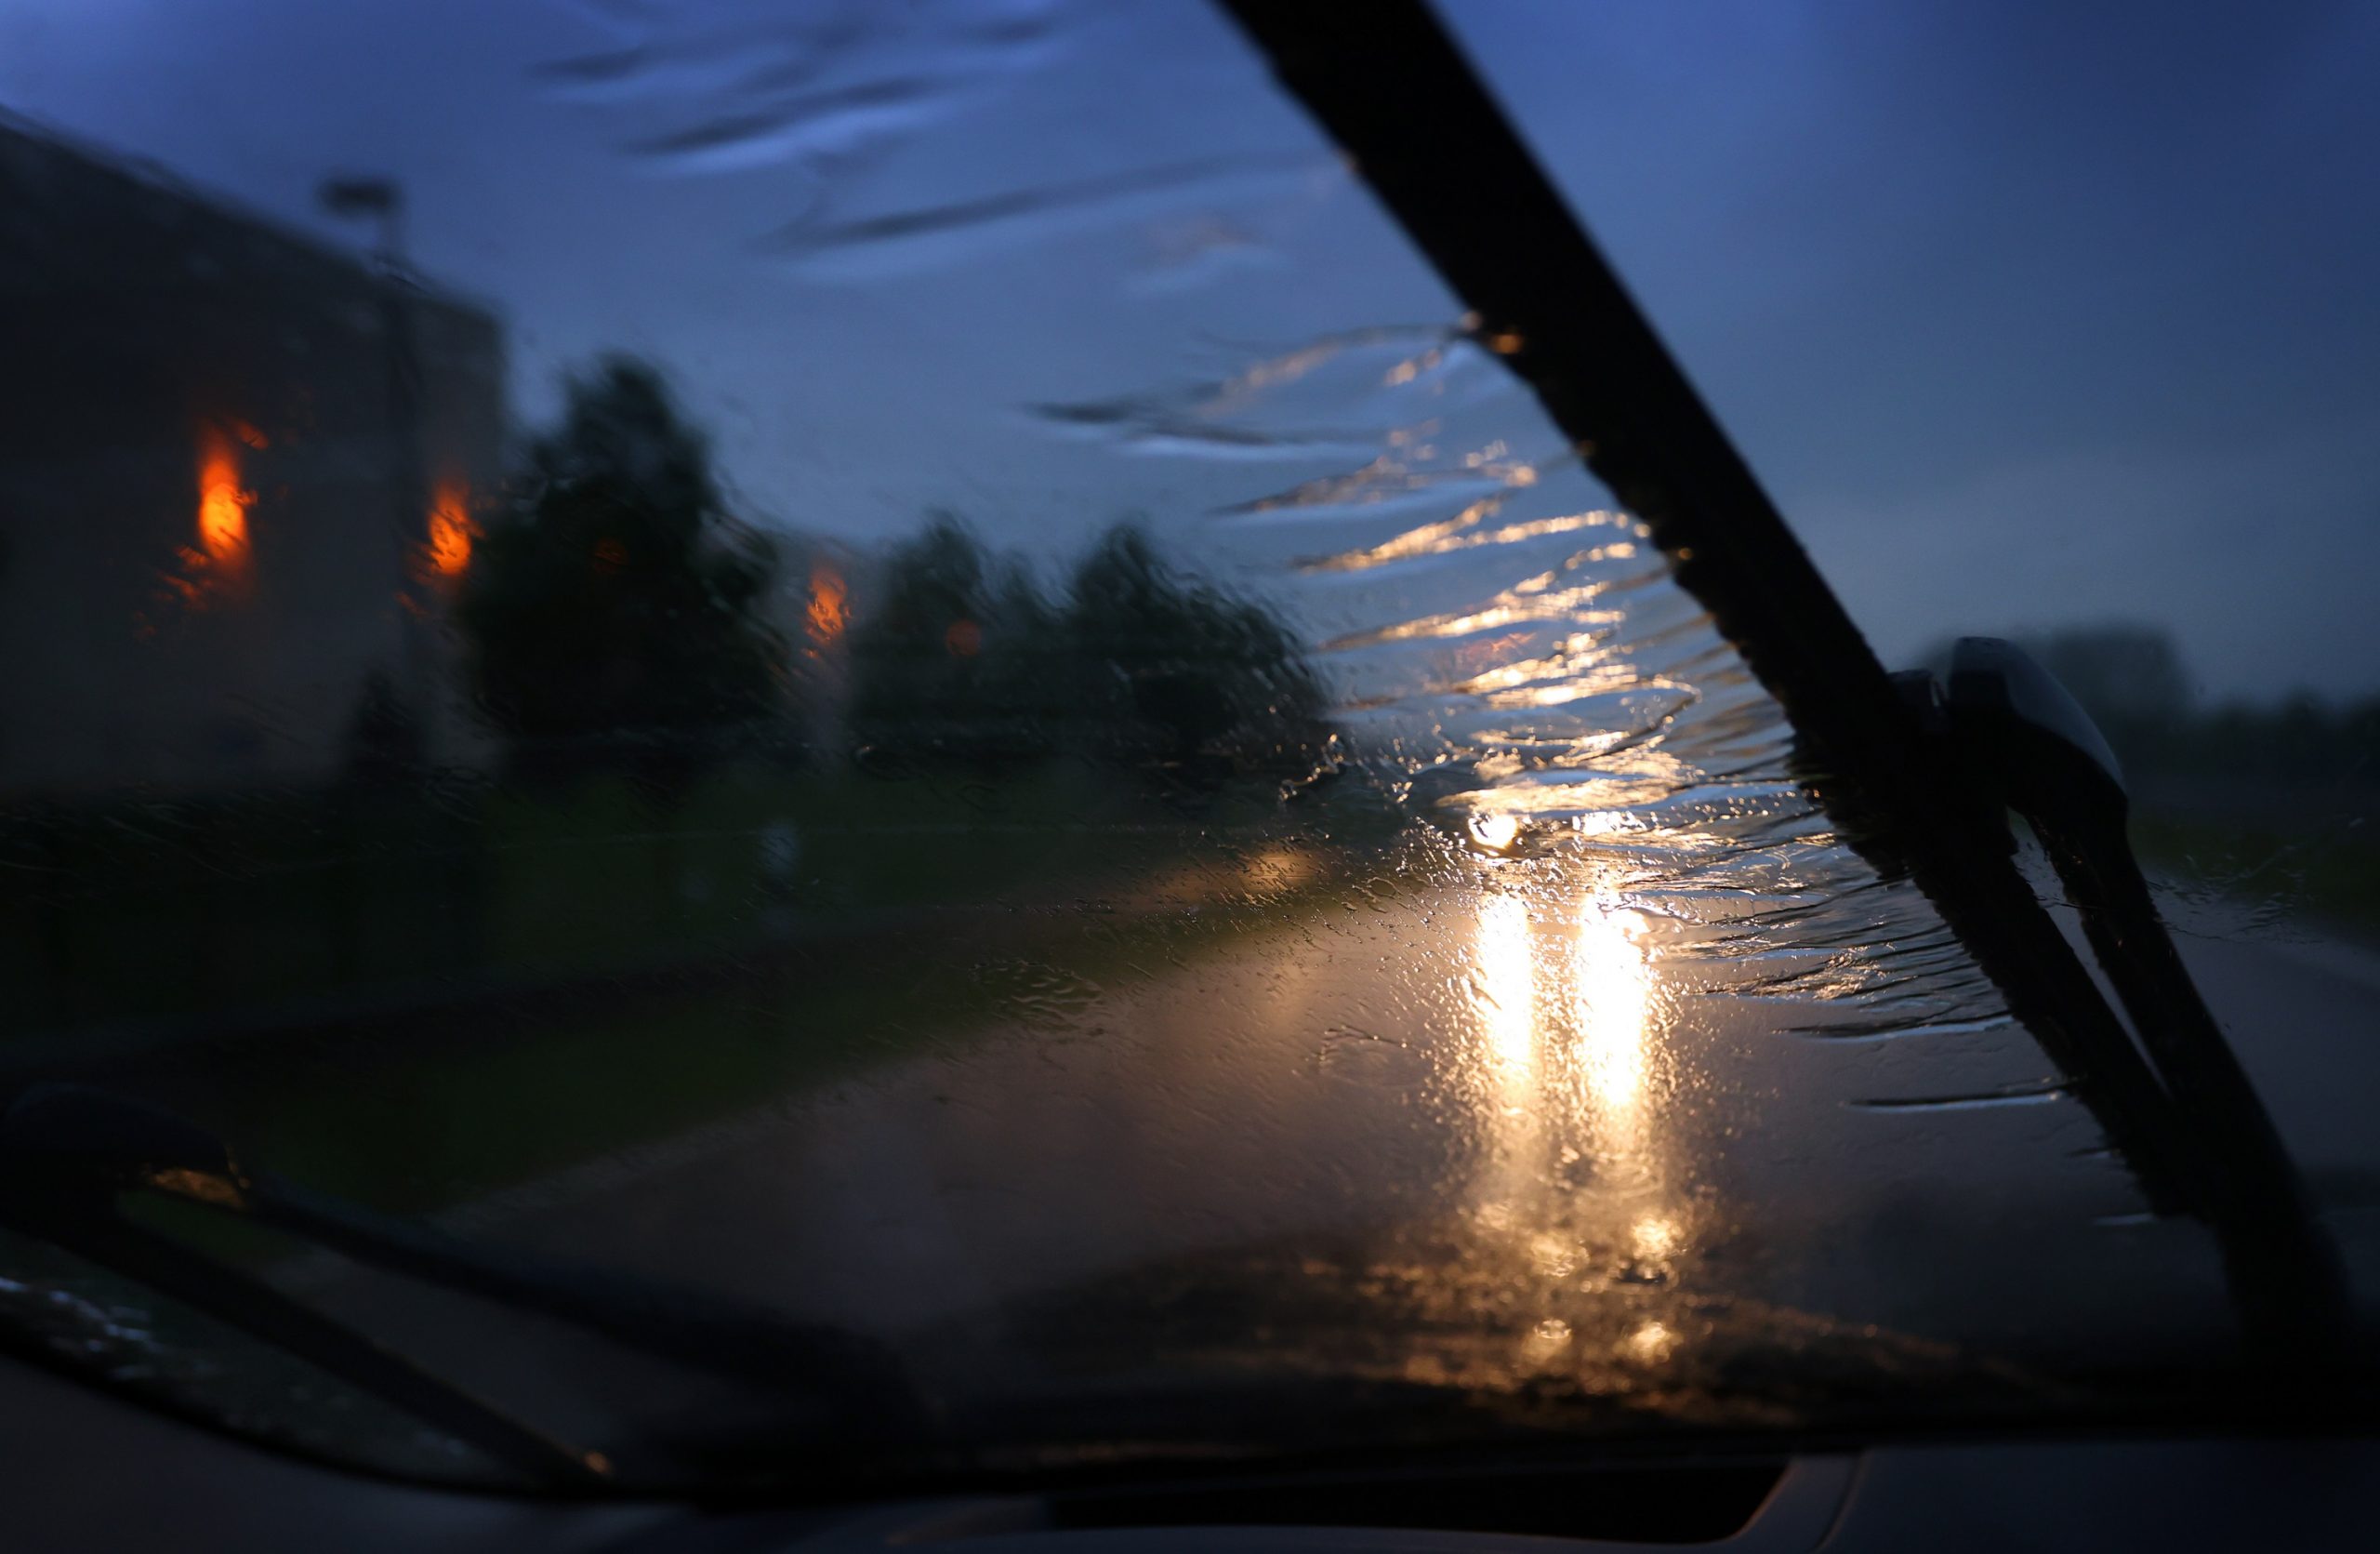 Windshield wipers cross a windscreen on a rainy night